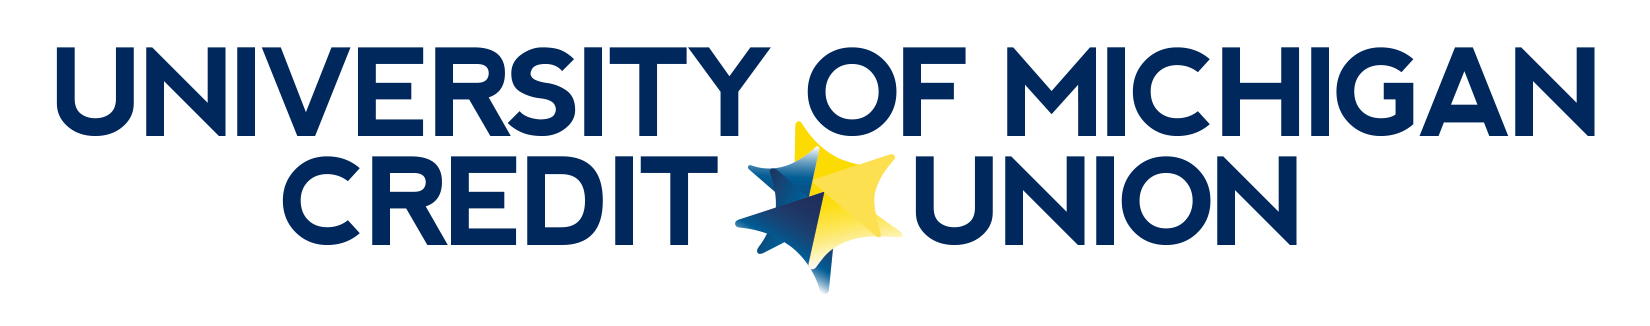 University of Michigan Credit Union Company Logo